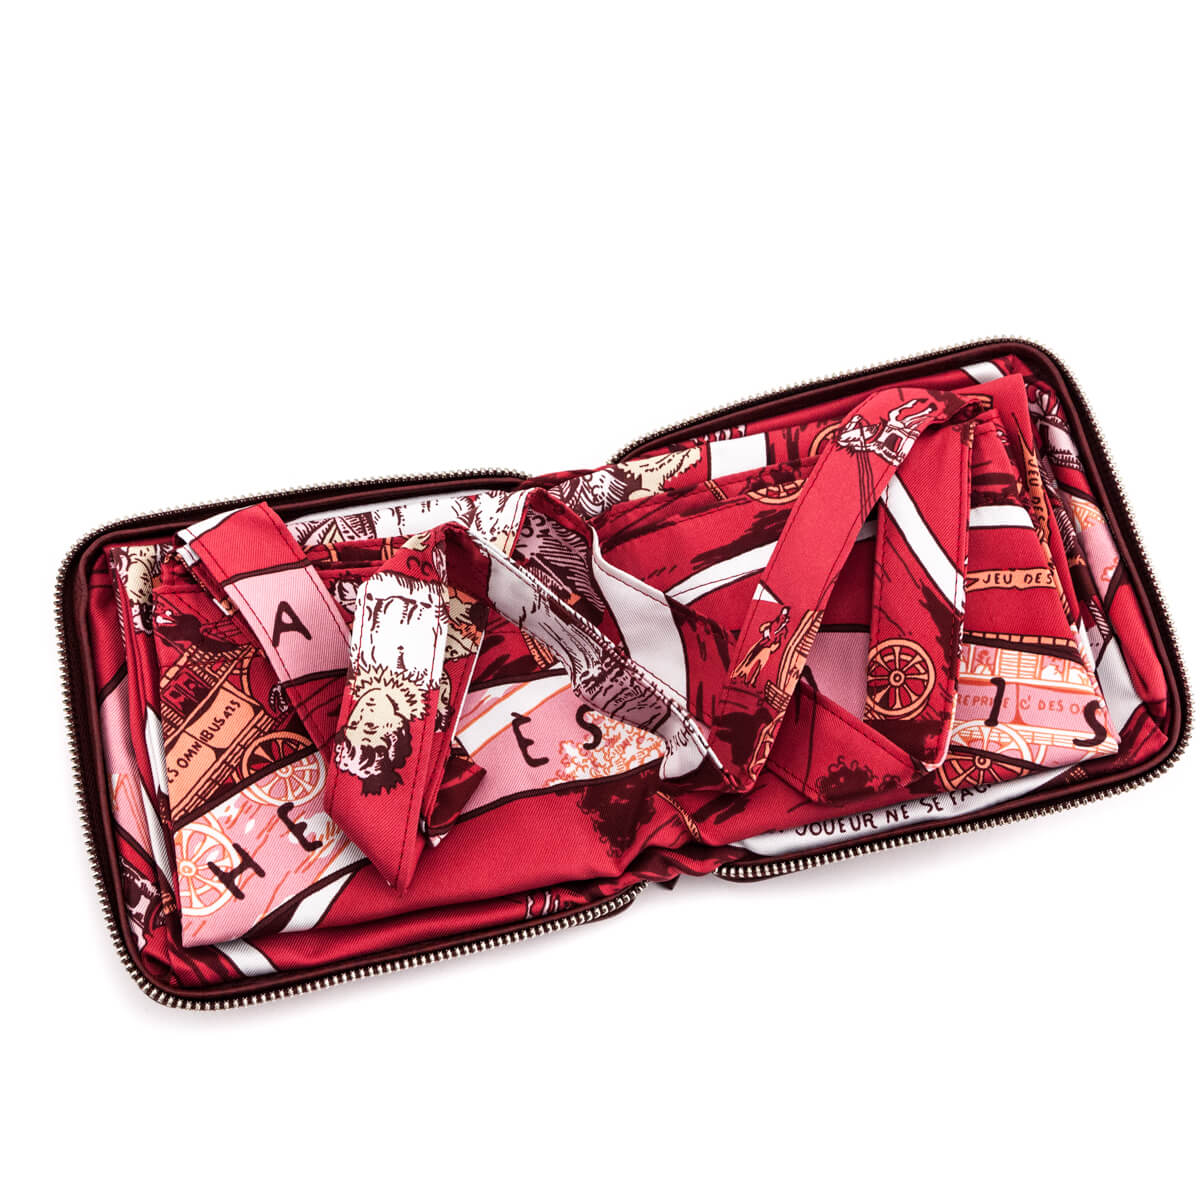 Hermes Rouge Buffle Silky Pop "Jeu Des Omnibus Et Dames Blanches" Shopper Tote - Love that Bag etc - Preowned Authentic Designer Handbags & Preloved Fashions